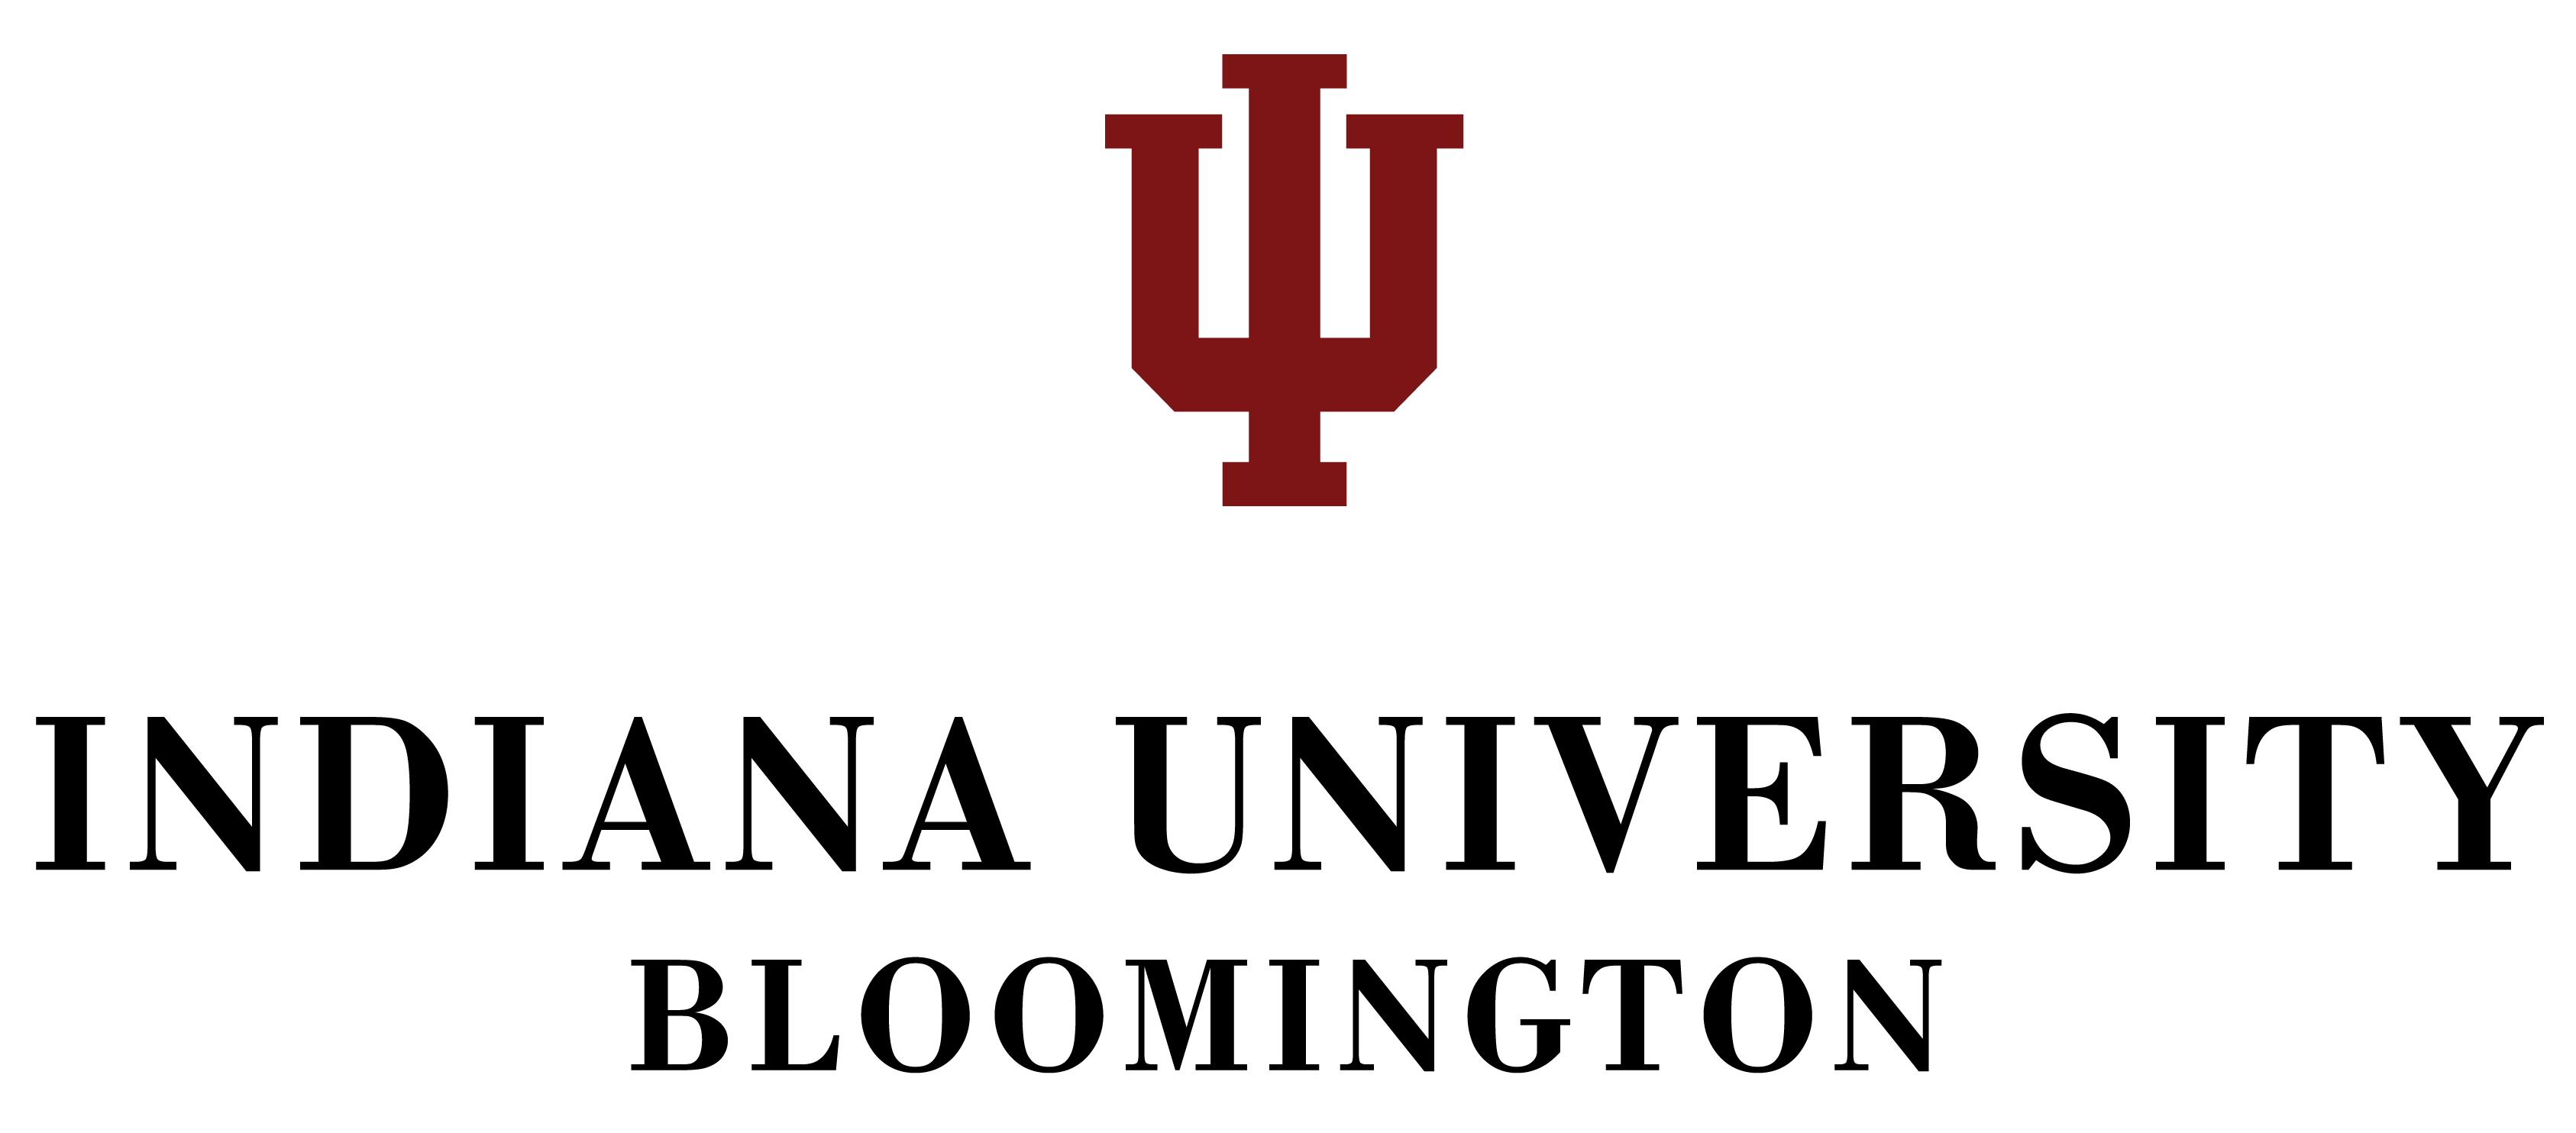 IU University Logo - Indiana university logo png 6 » PNG Image